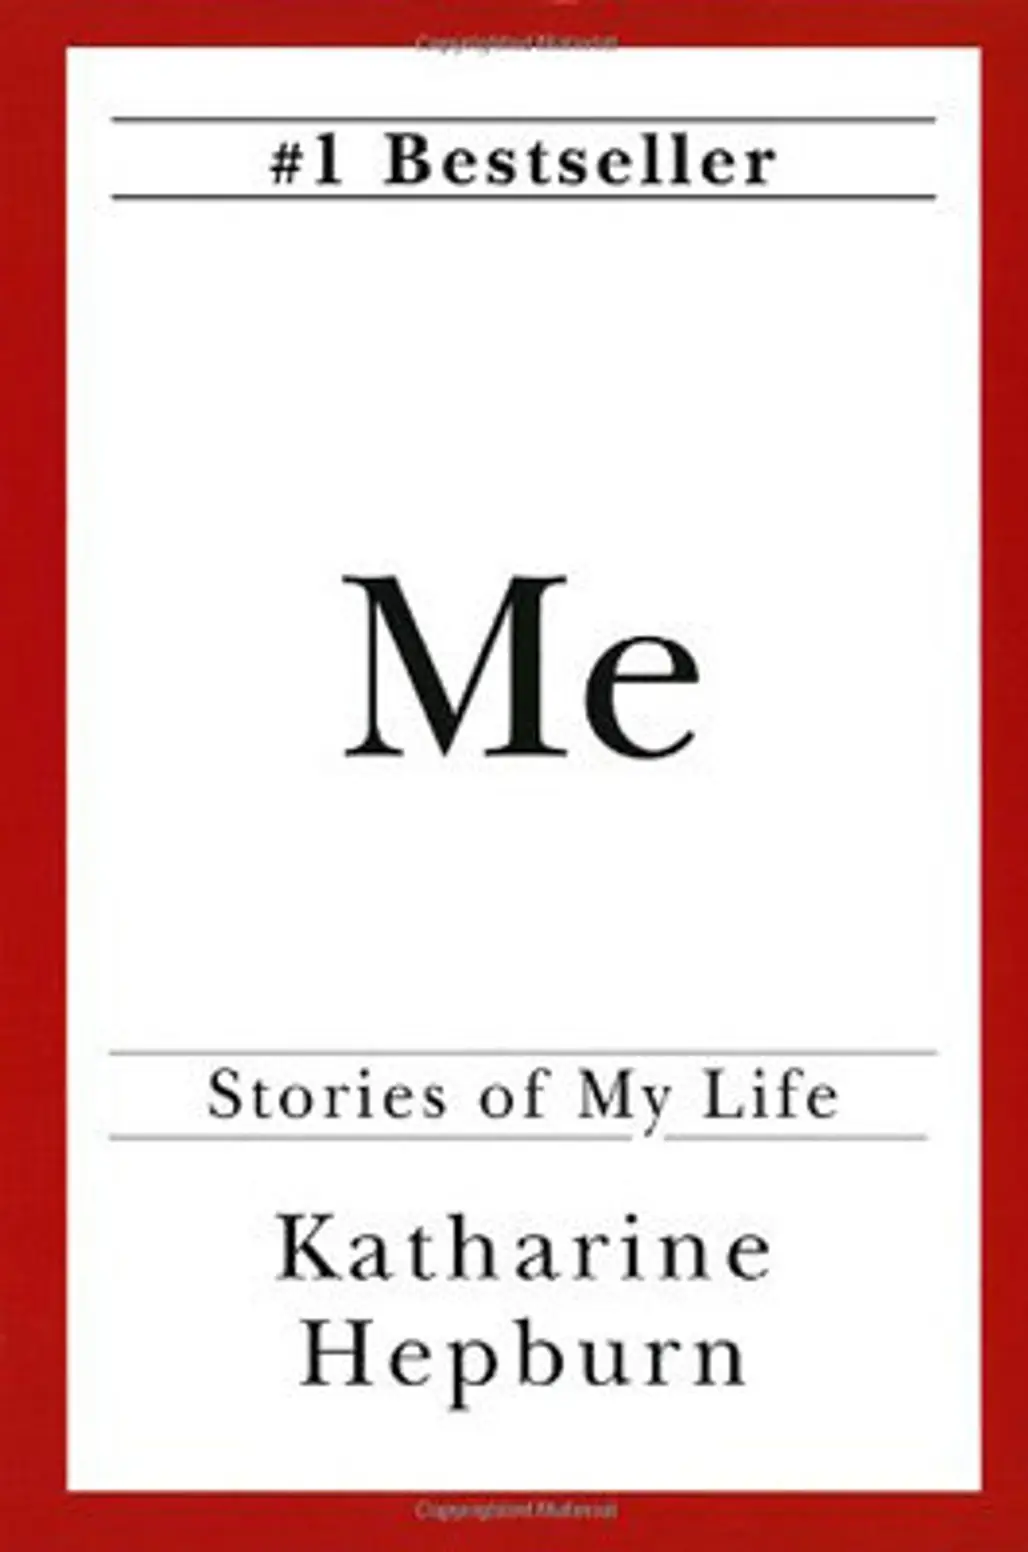 Katherine Hepburn ‘Me: Stories of My Life’